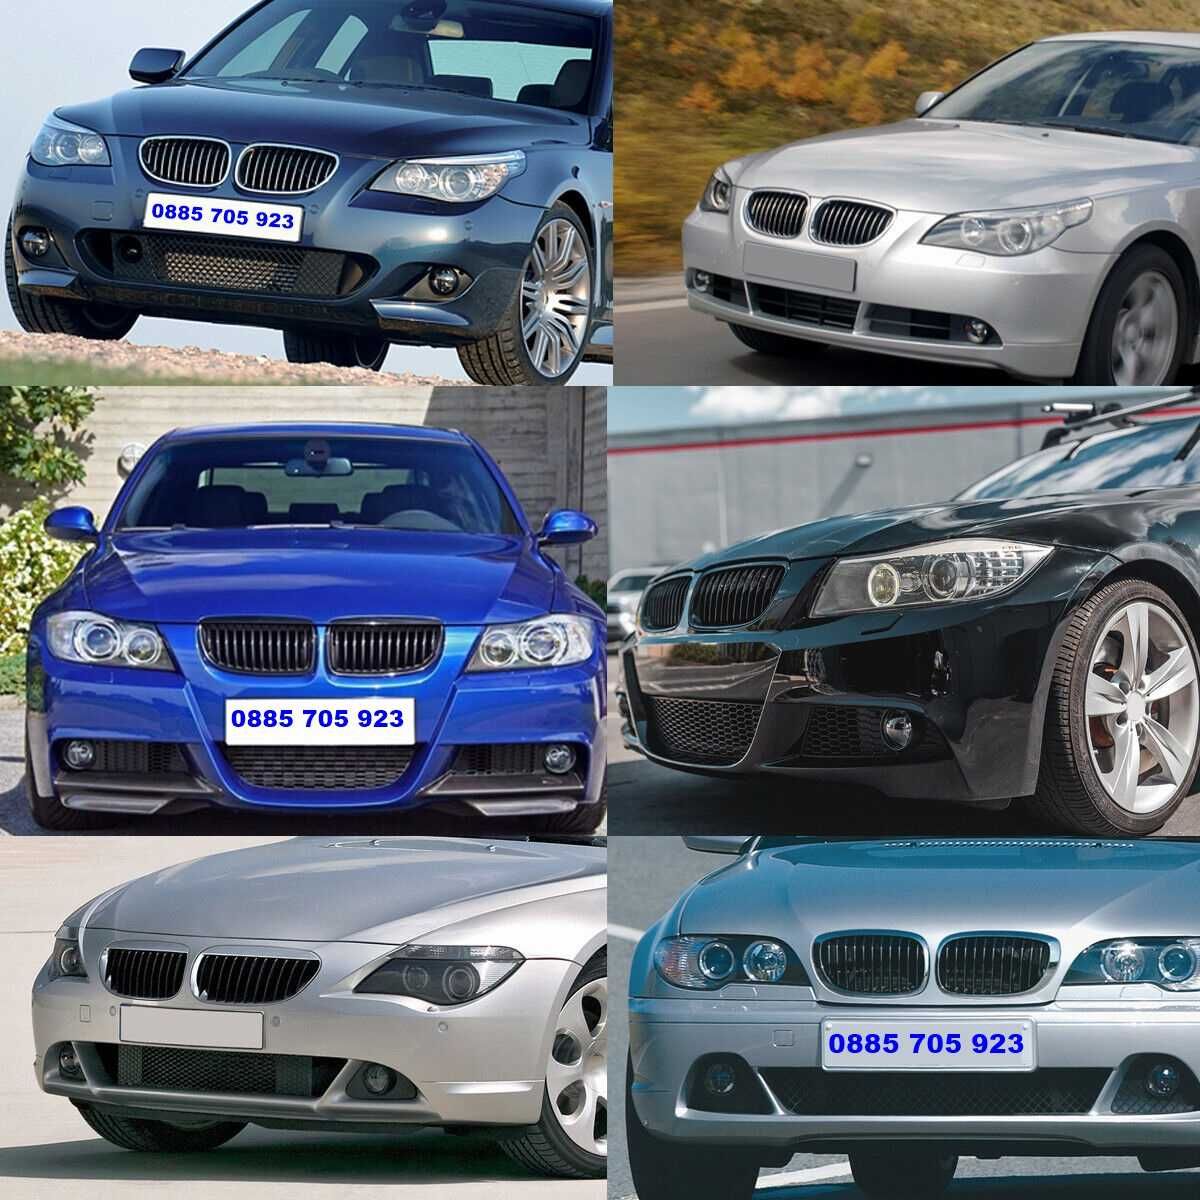 ХАЛОГЕНИ ЗА БМВ Е39 / BMW E39 и други модели BMW